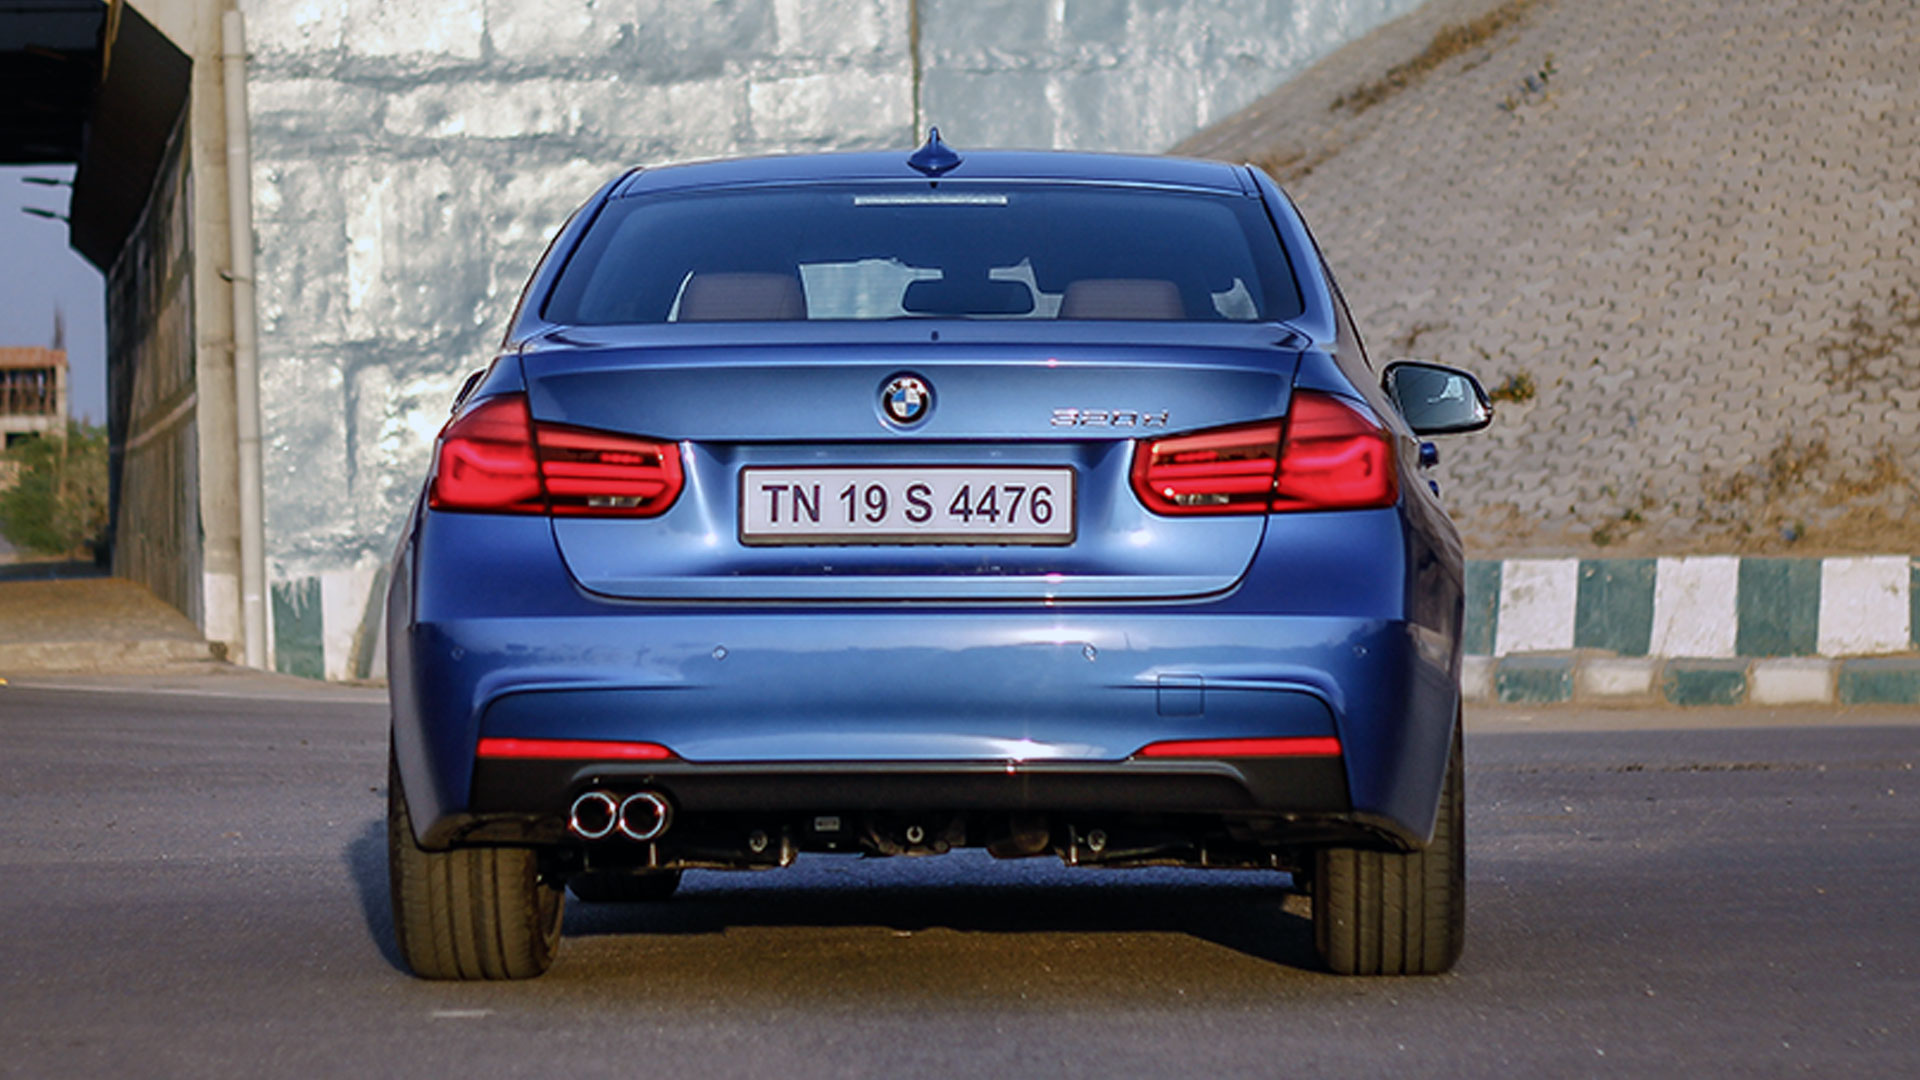 BMW 3 series 2015 320d Luxury Line Compare